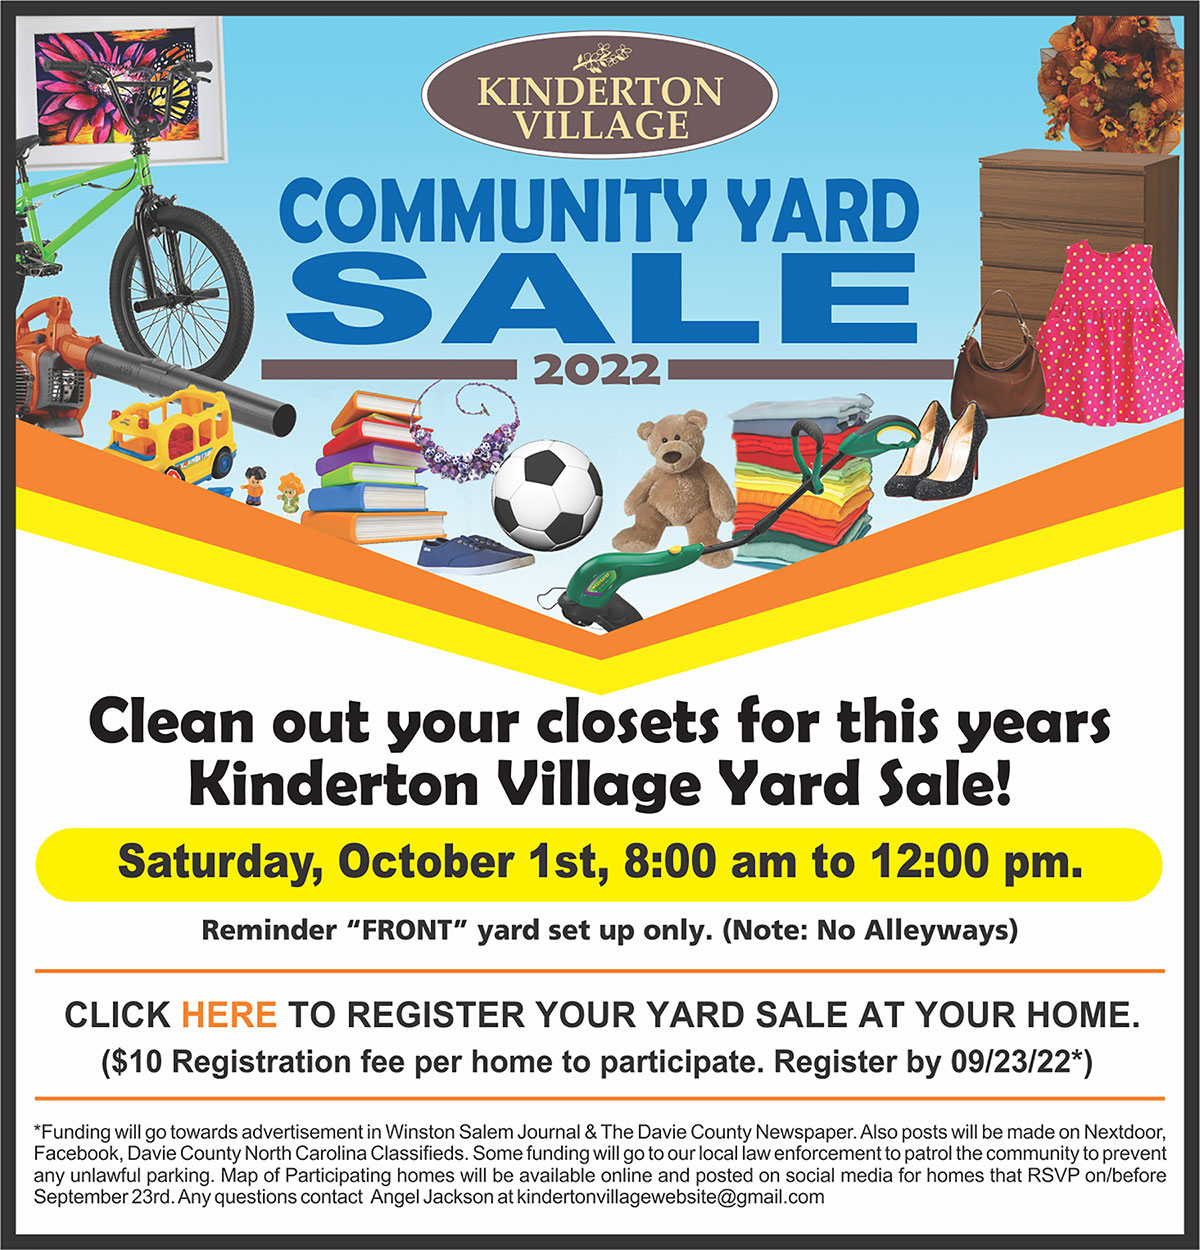 Kinderton Community Yard Sale Registration